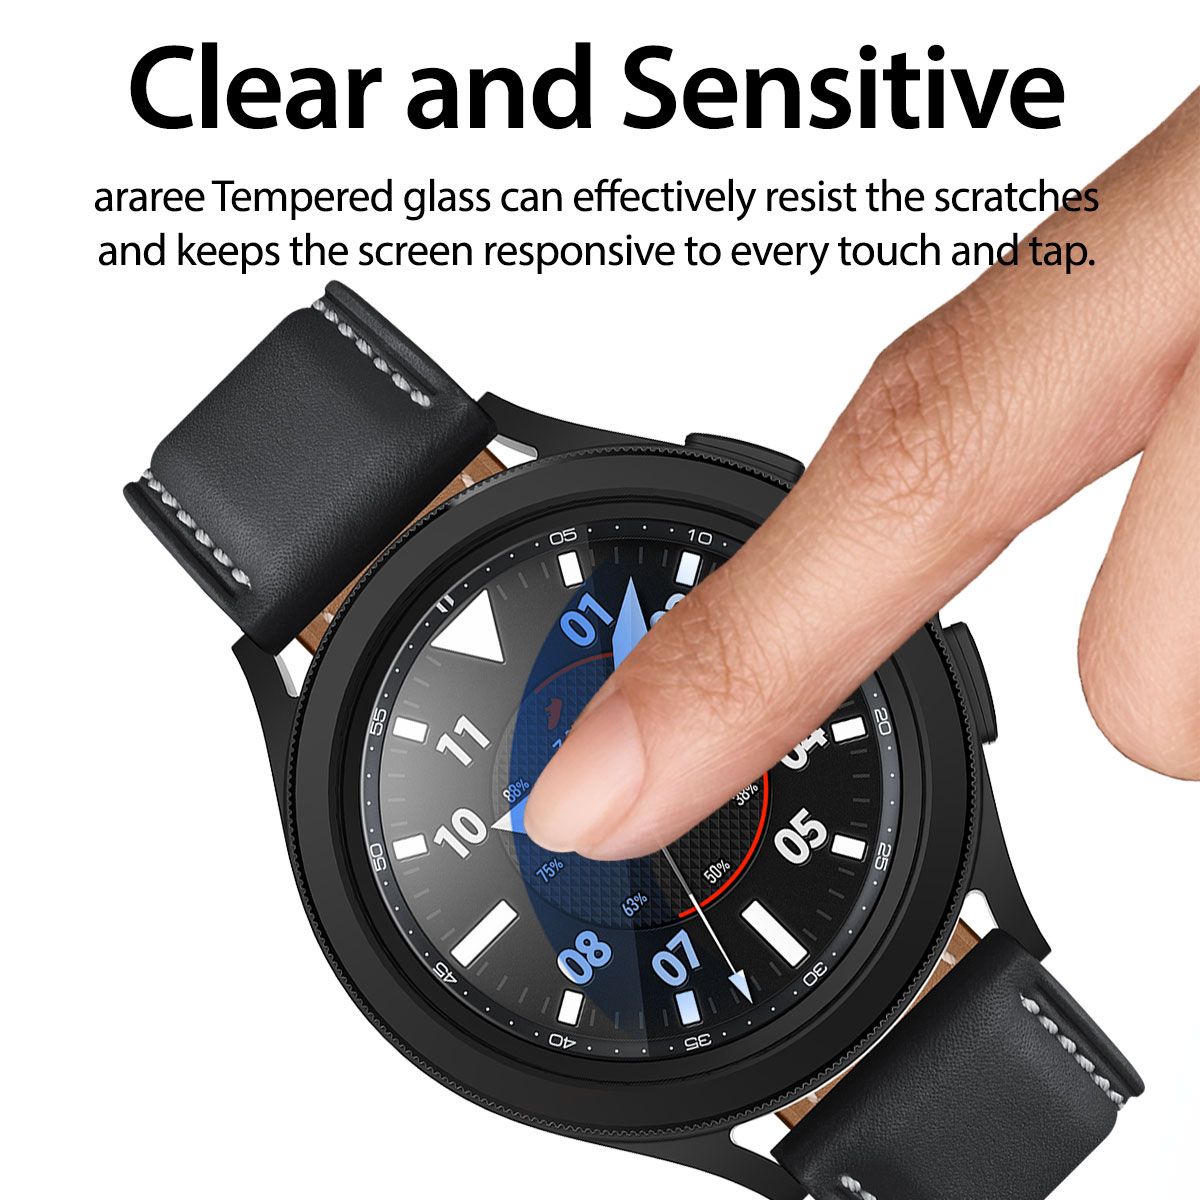 Araree Sub-Core Samsung Galaxy Watch 4 Glass Screen Protector